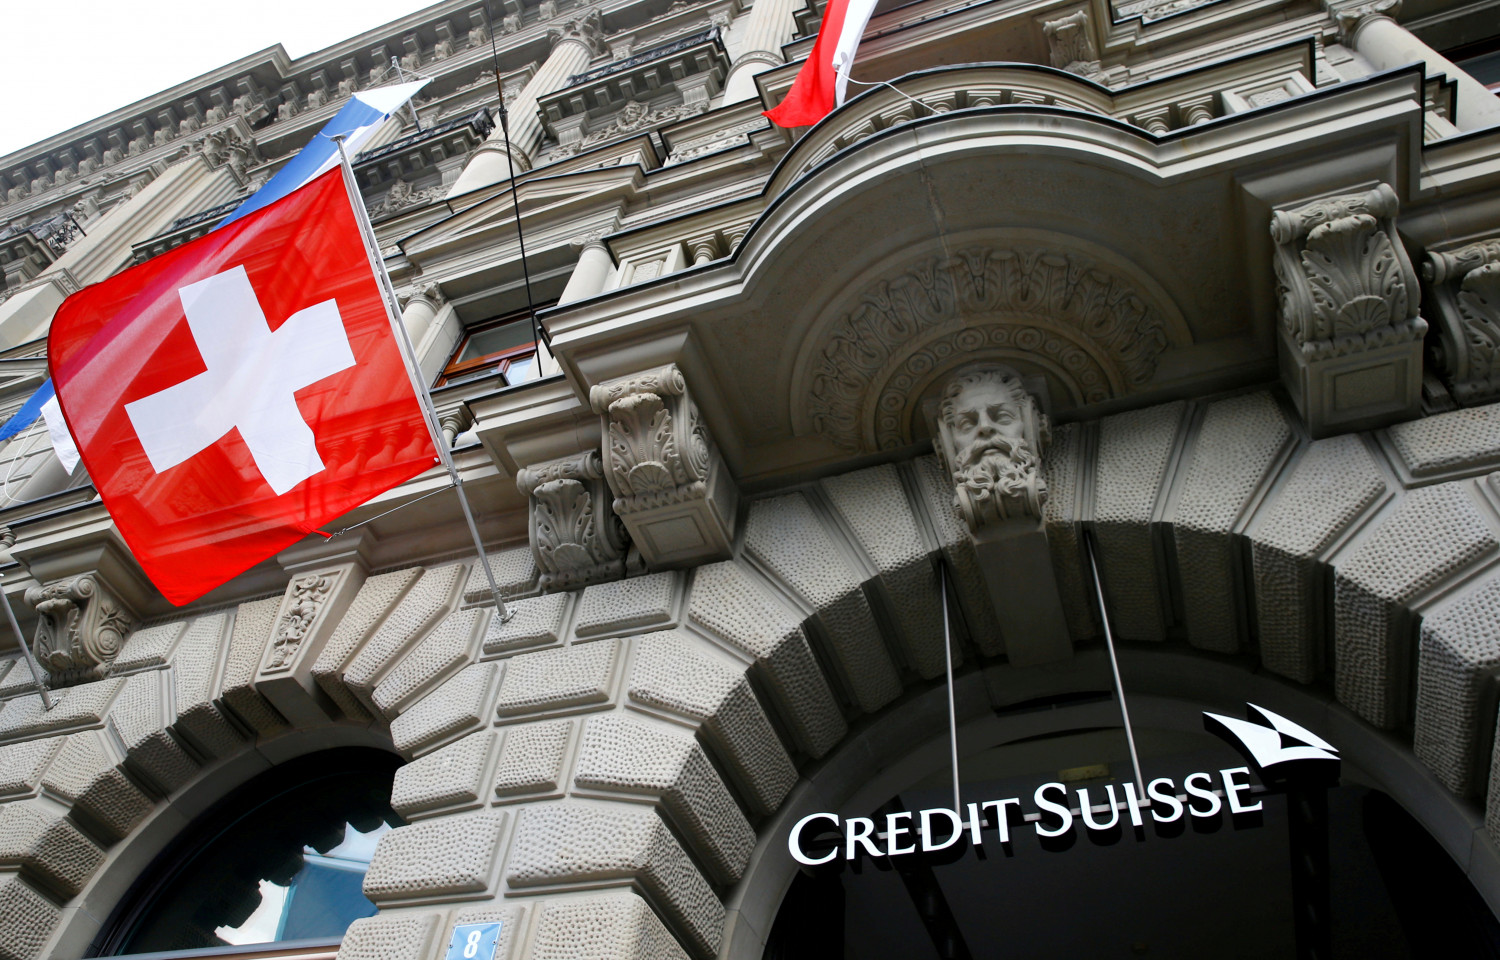 credit suisse compte recuperer un pret de 140 millions de dollars a greensill 20210422122414 